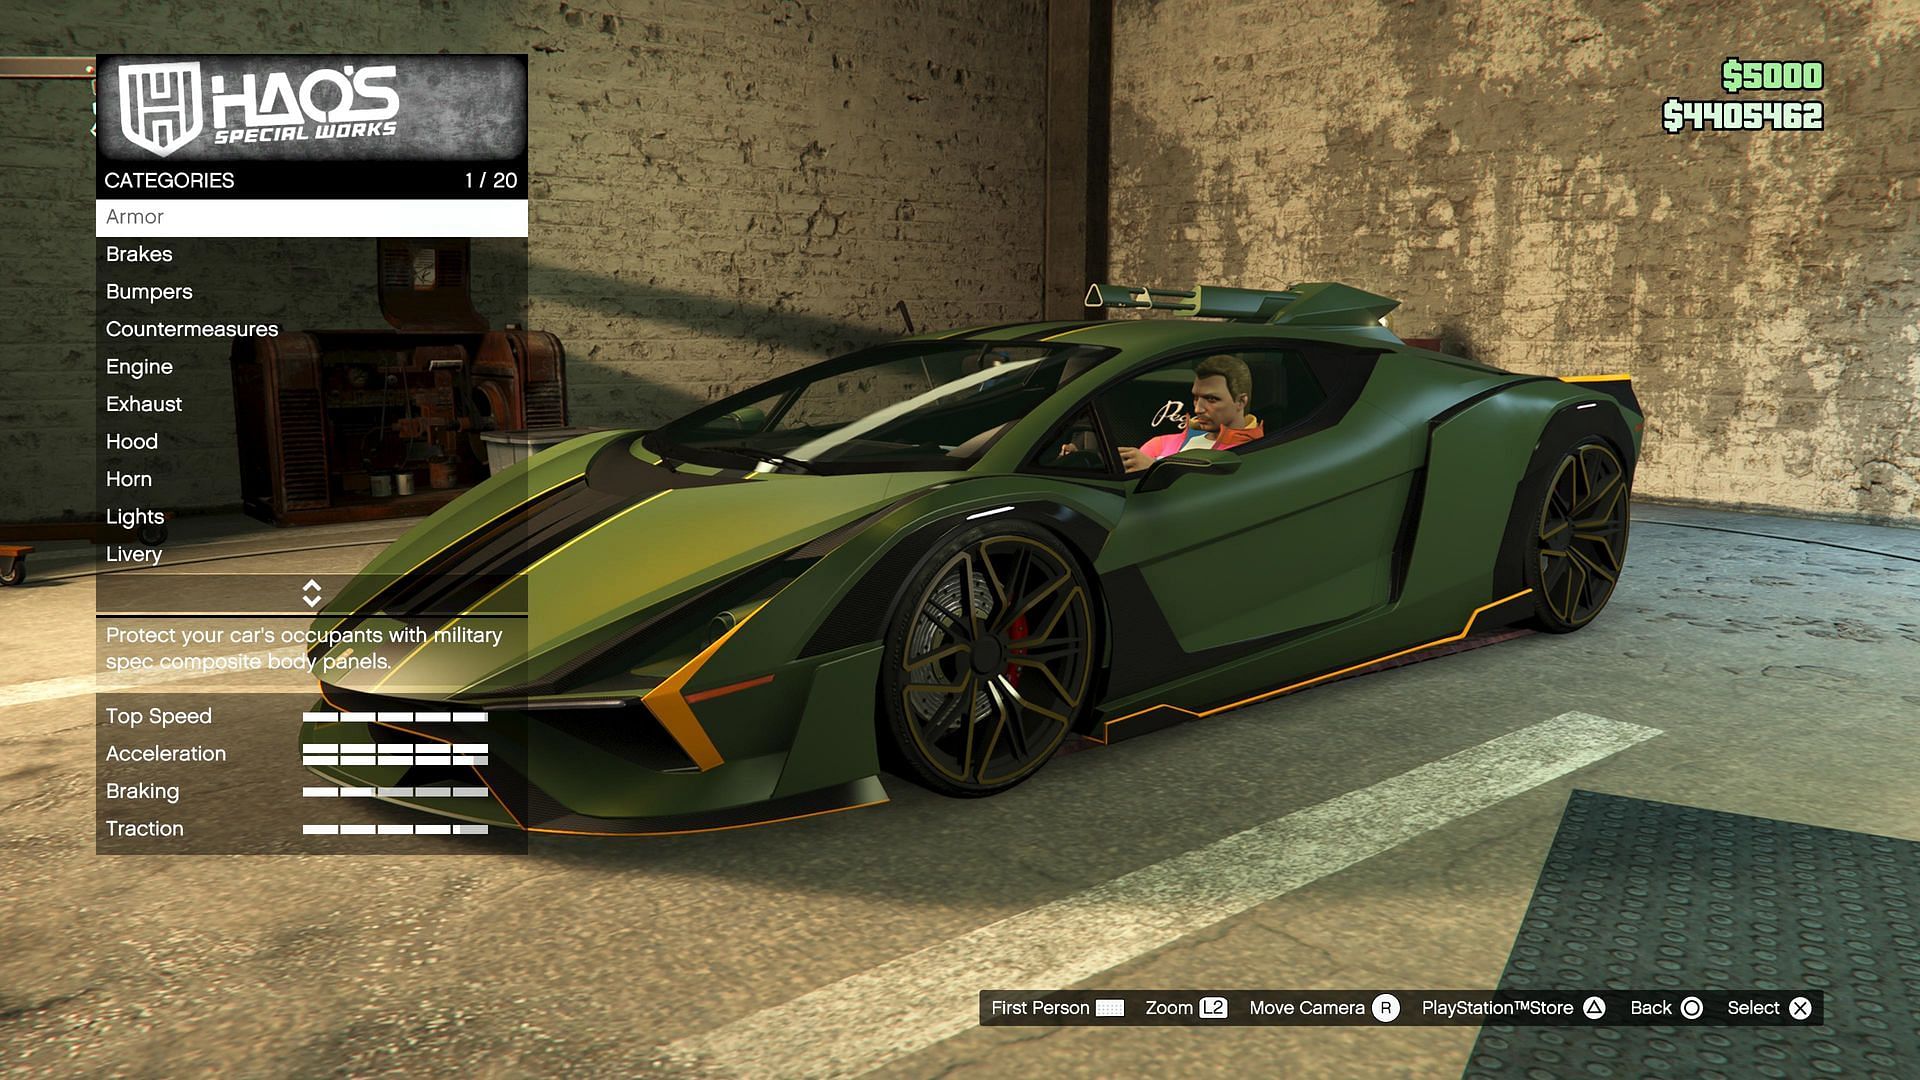 This menu shows a car that already has HSW upgrades (Image via Rockstar Games)